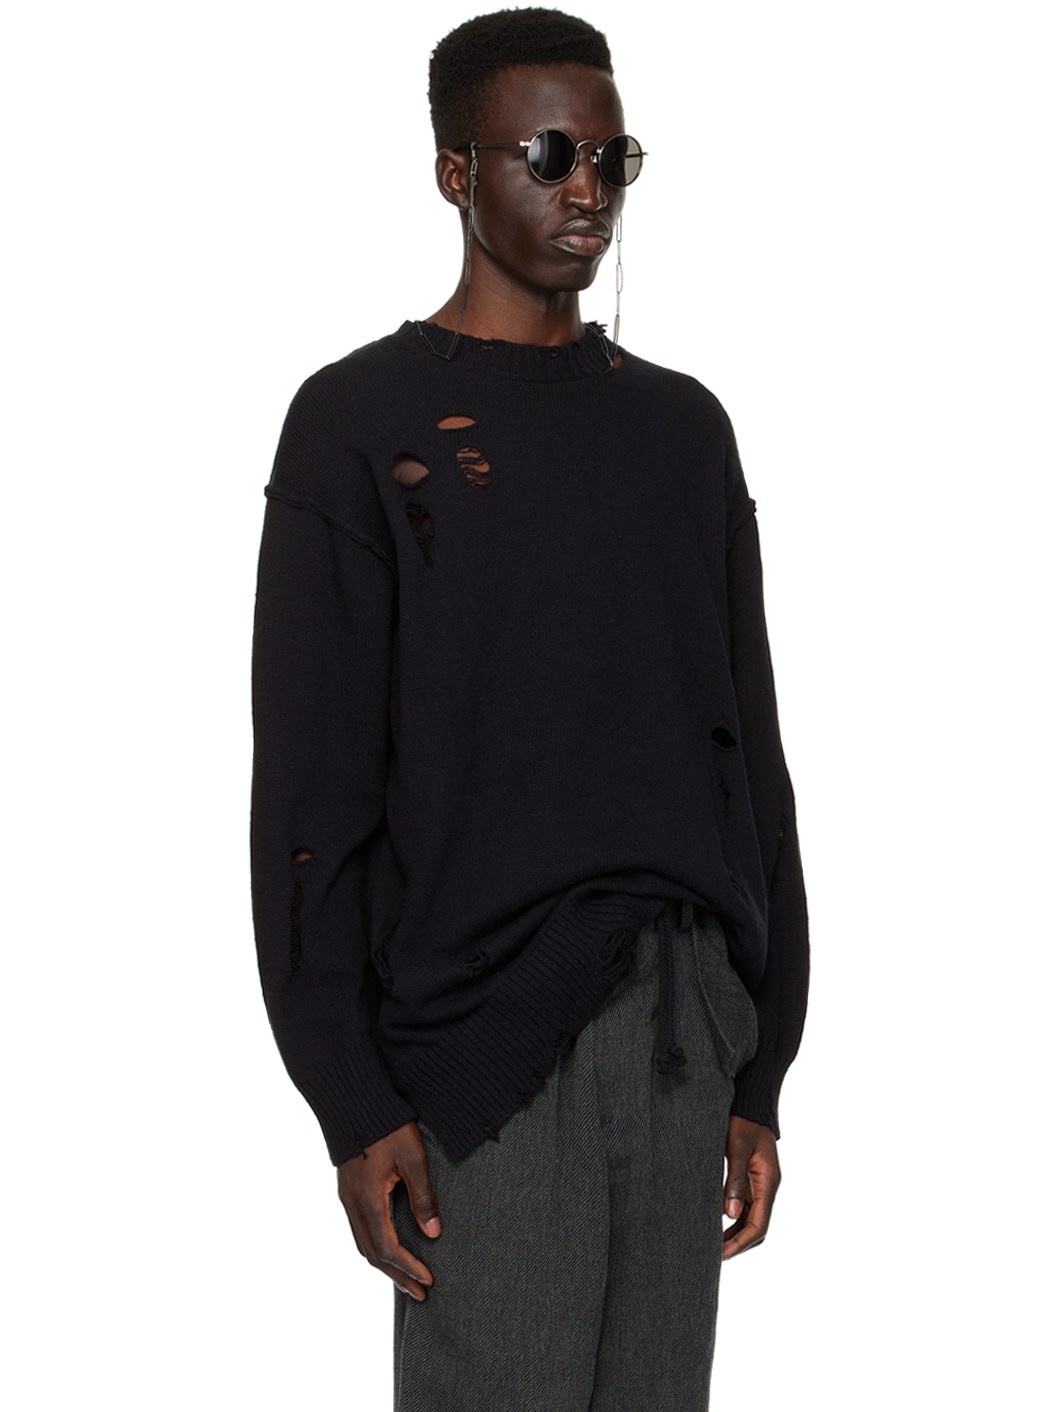 Black Distressed Sweater - 2